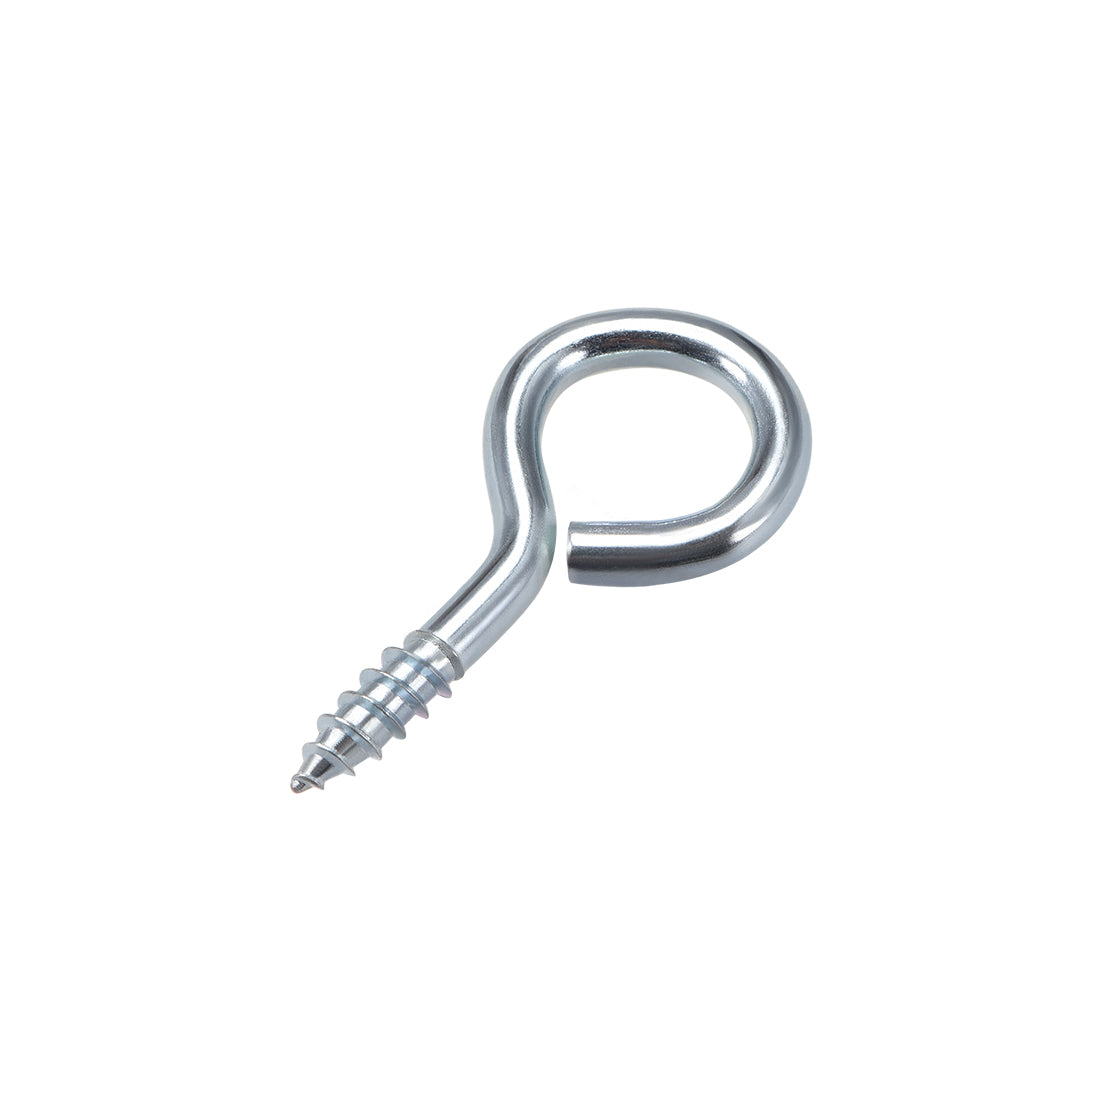 uxcell Uxcell 0.75" Small Screw Eye Hooks Self Tapping Screws Carbon Steel Screw-in Hanger Eye-Shape Ring Hooks Sliver 50pcs